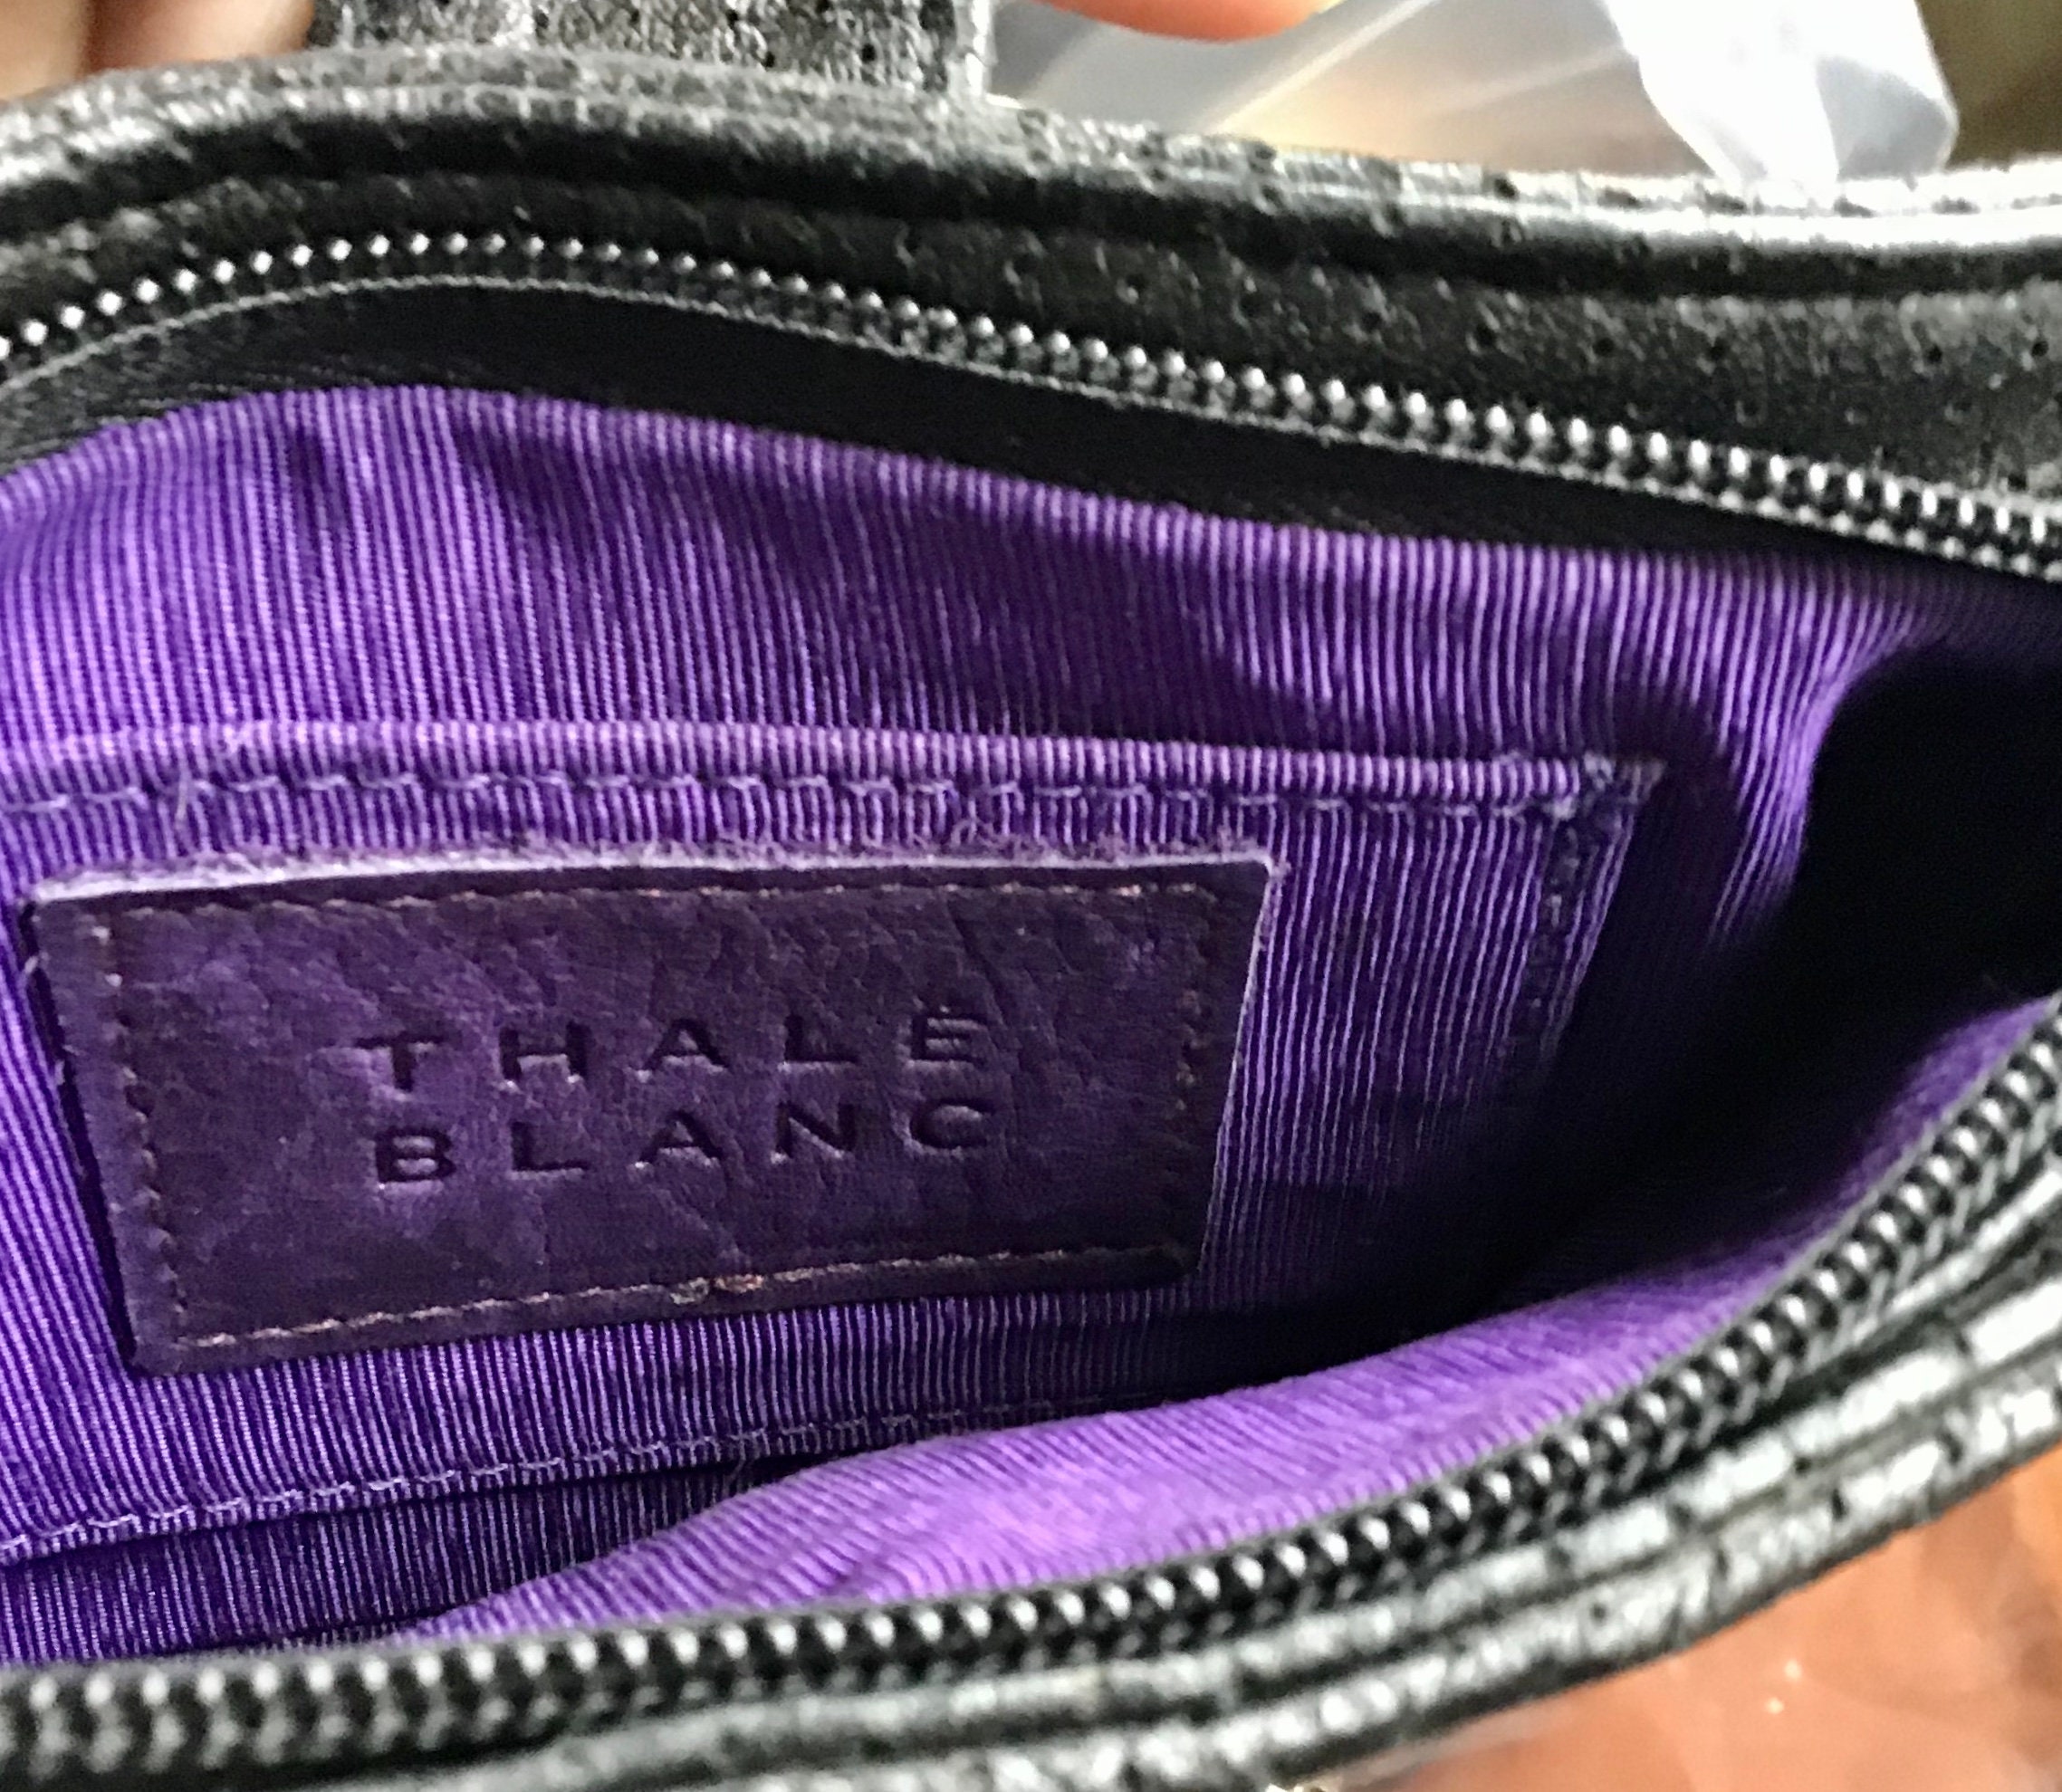 Thale BLANC Mini Bag Three Way Handbag Black Leather Celebrity - Etsy